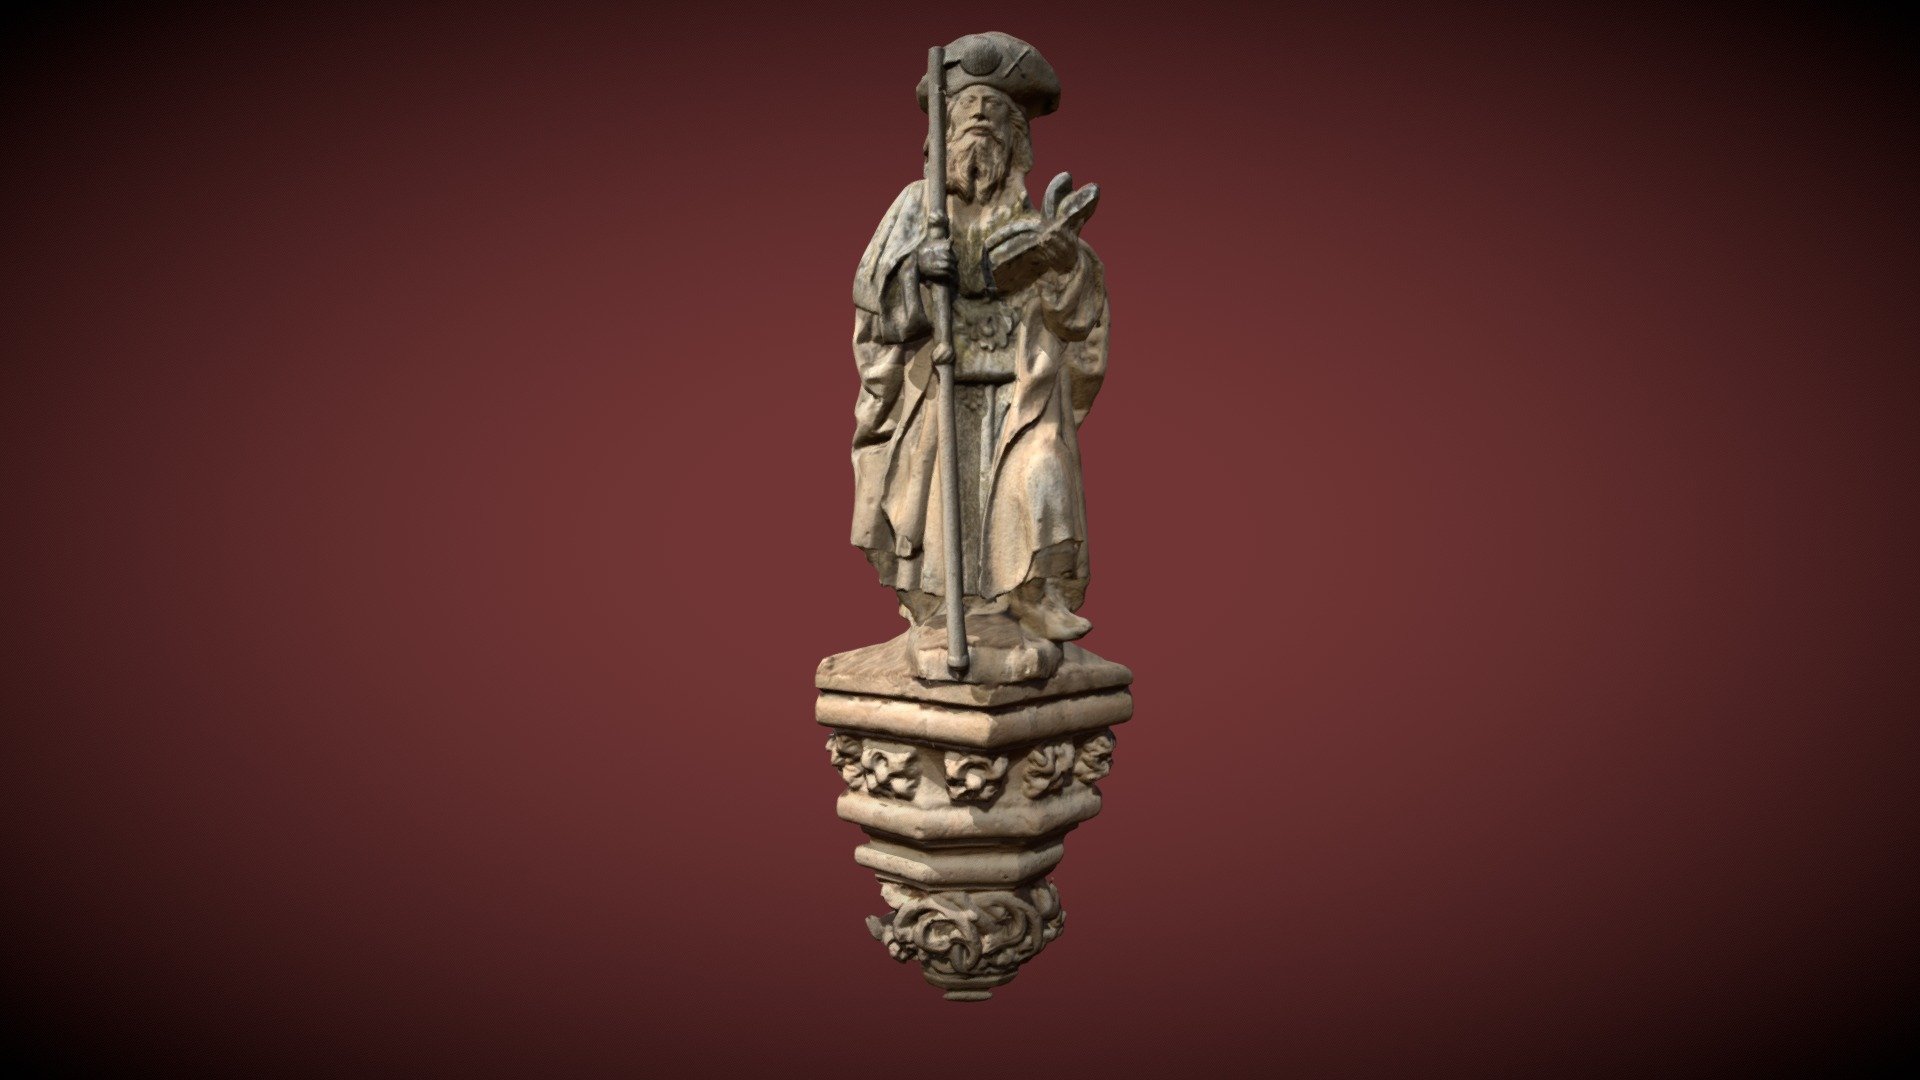 Escultura del Apóstol Santiago localizada en la portada de la entrada a la Parroquia de San Bartolomé de Montoro.

Escultura realizada en piedra molinaza en el siglo XVI 3d model